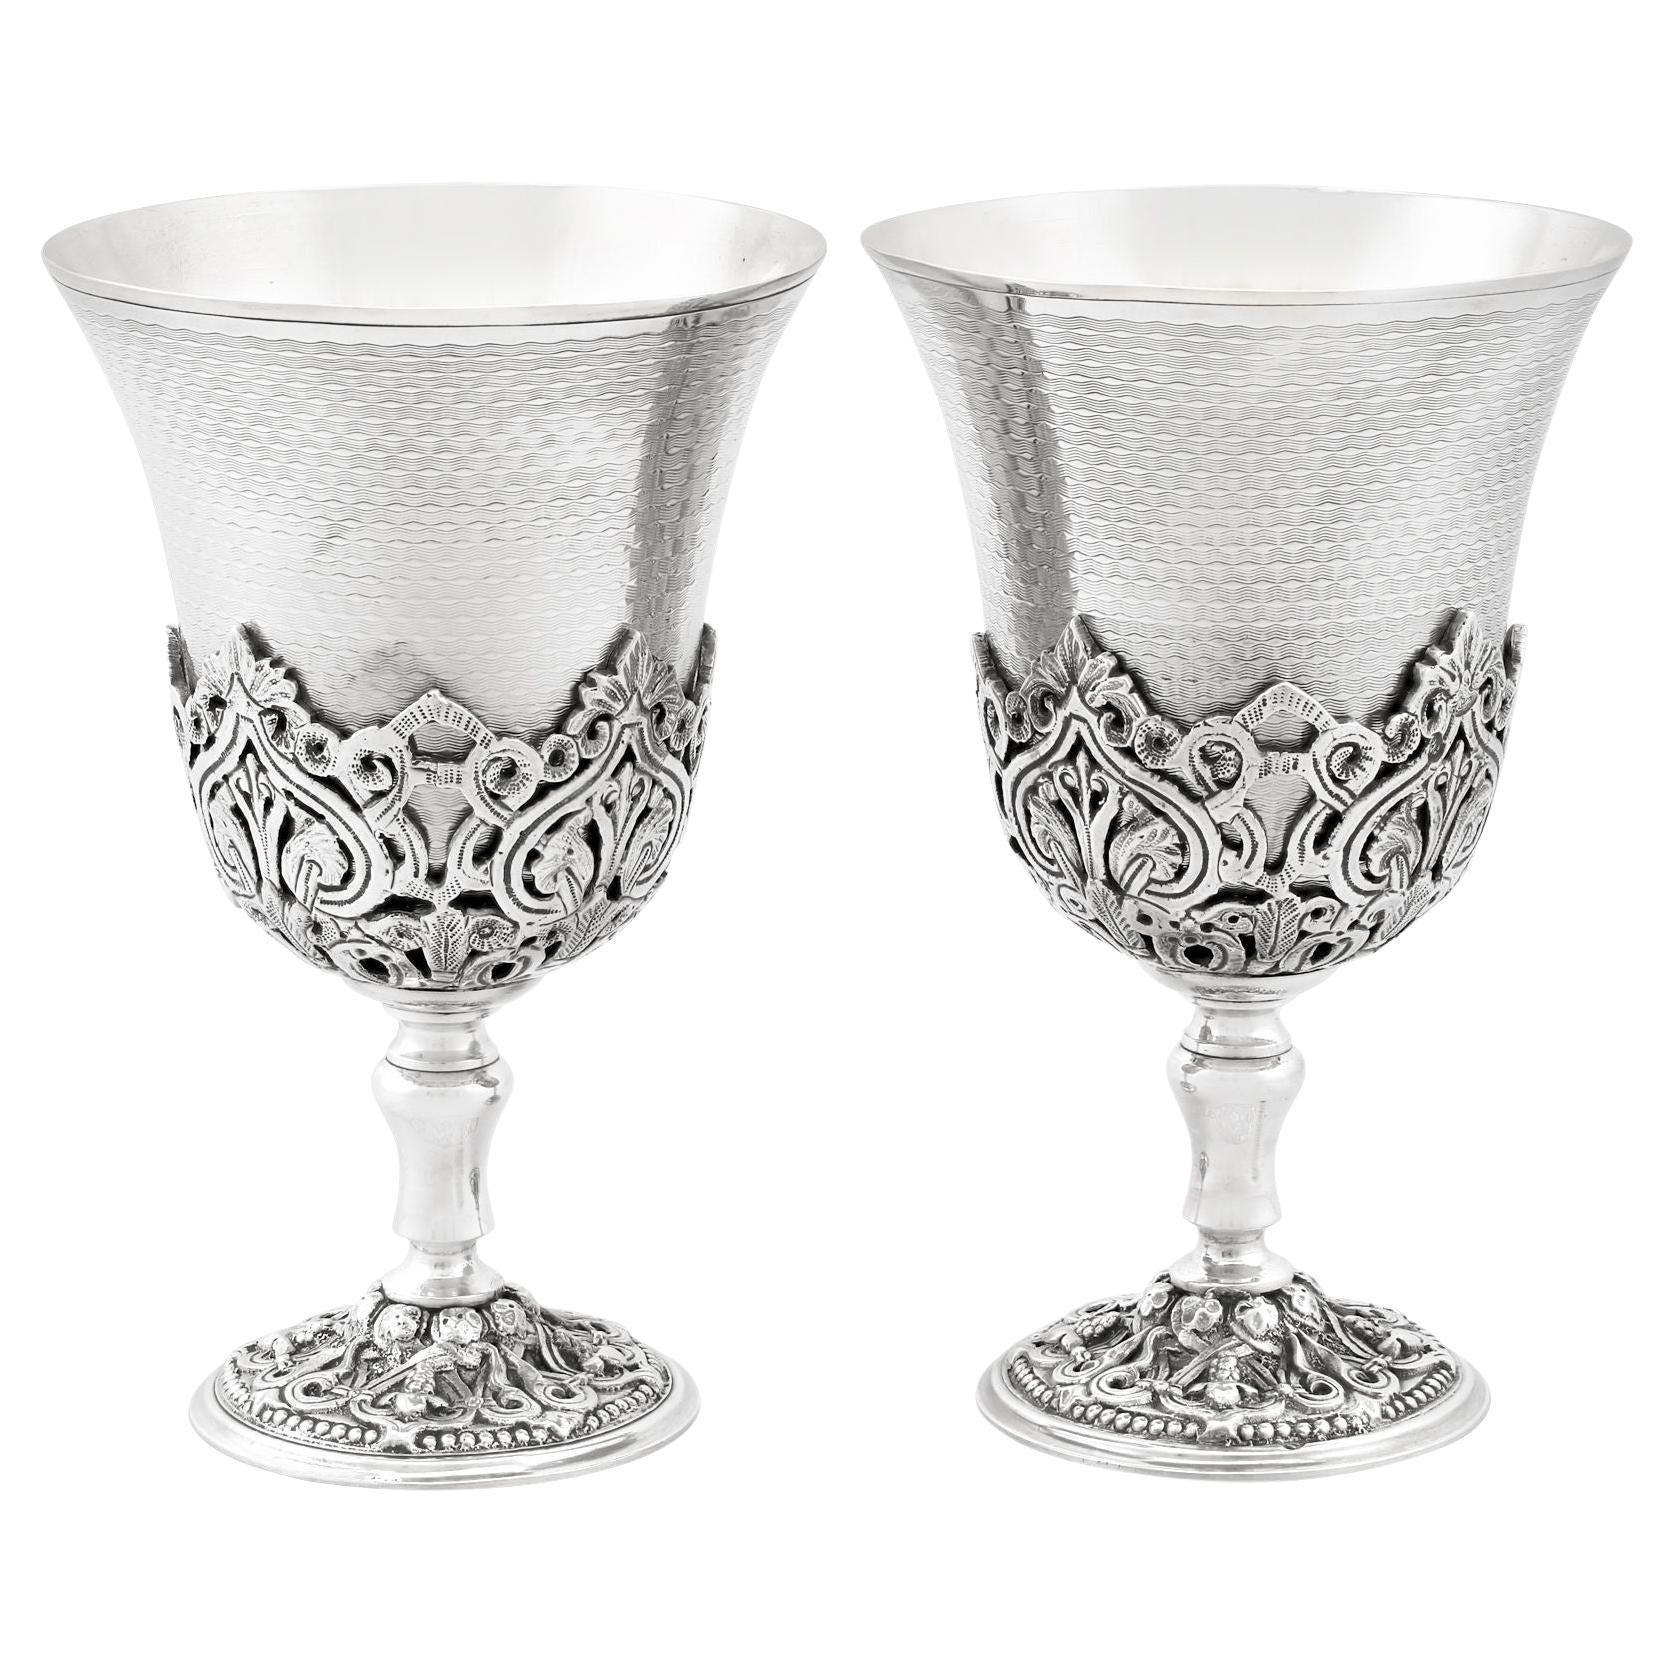 Antiguas copas turcas de plata, hacia 1880